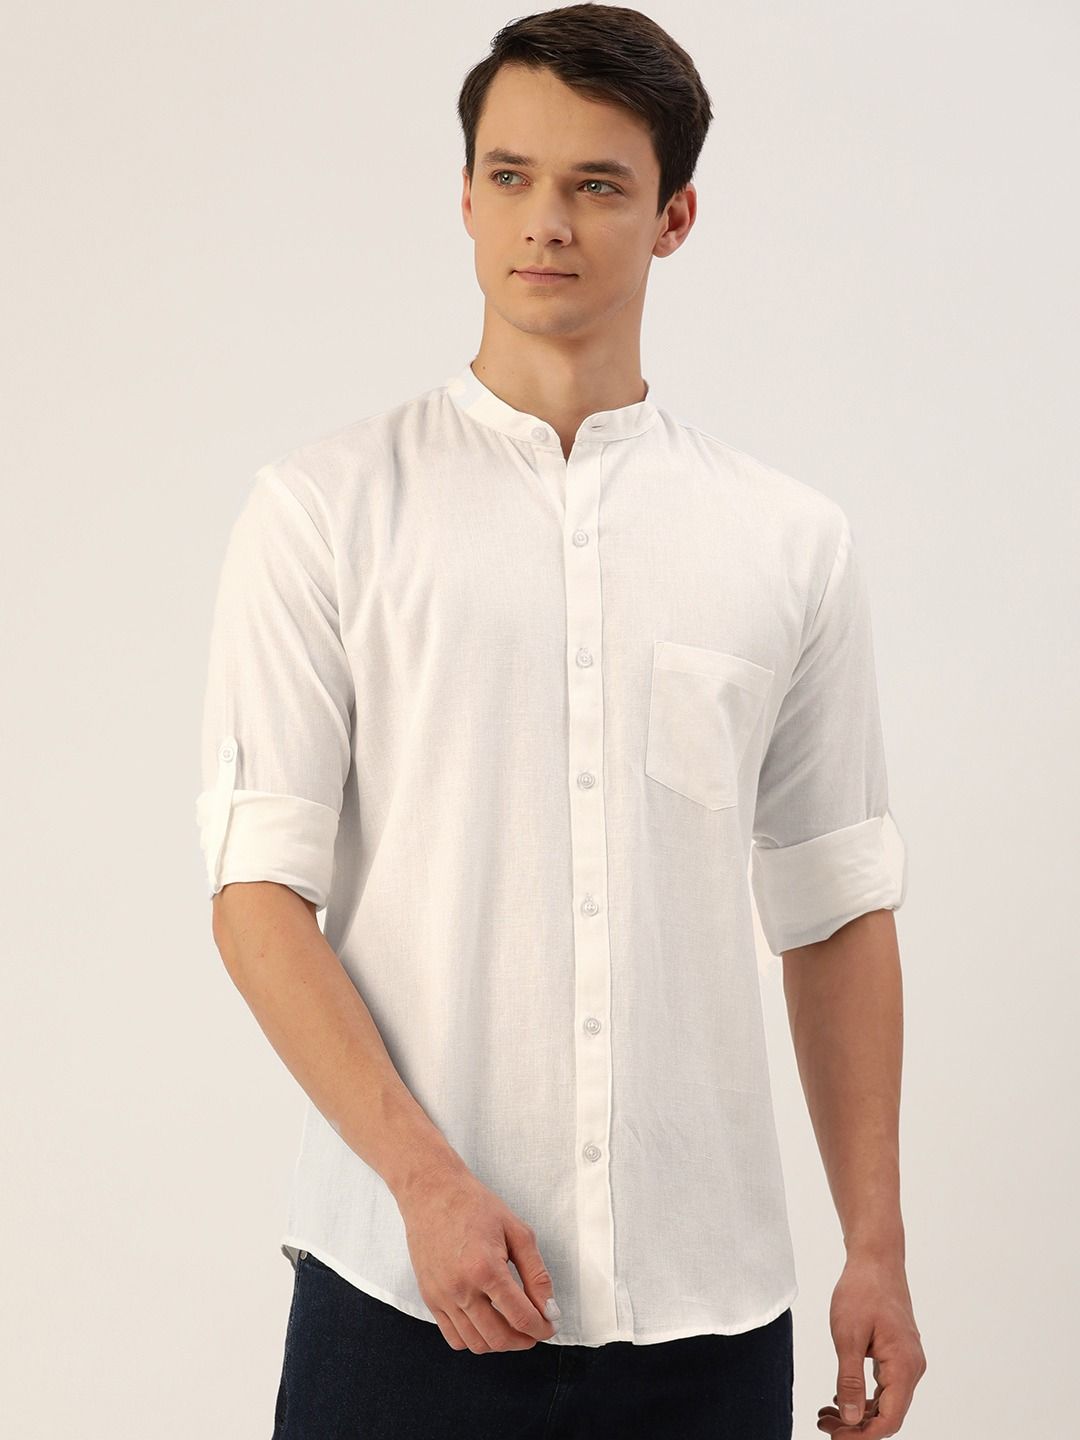 White Shirt Chinese Collar | laboratoriomaradona.com.ar